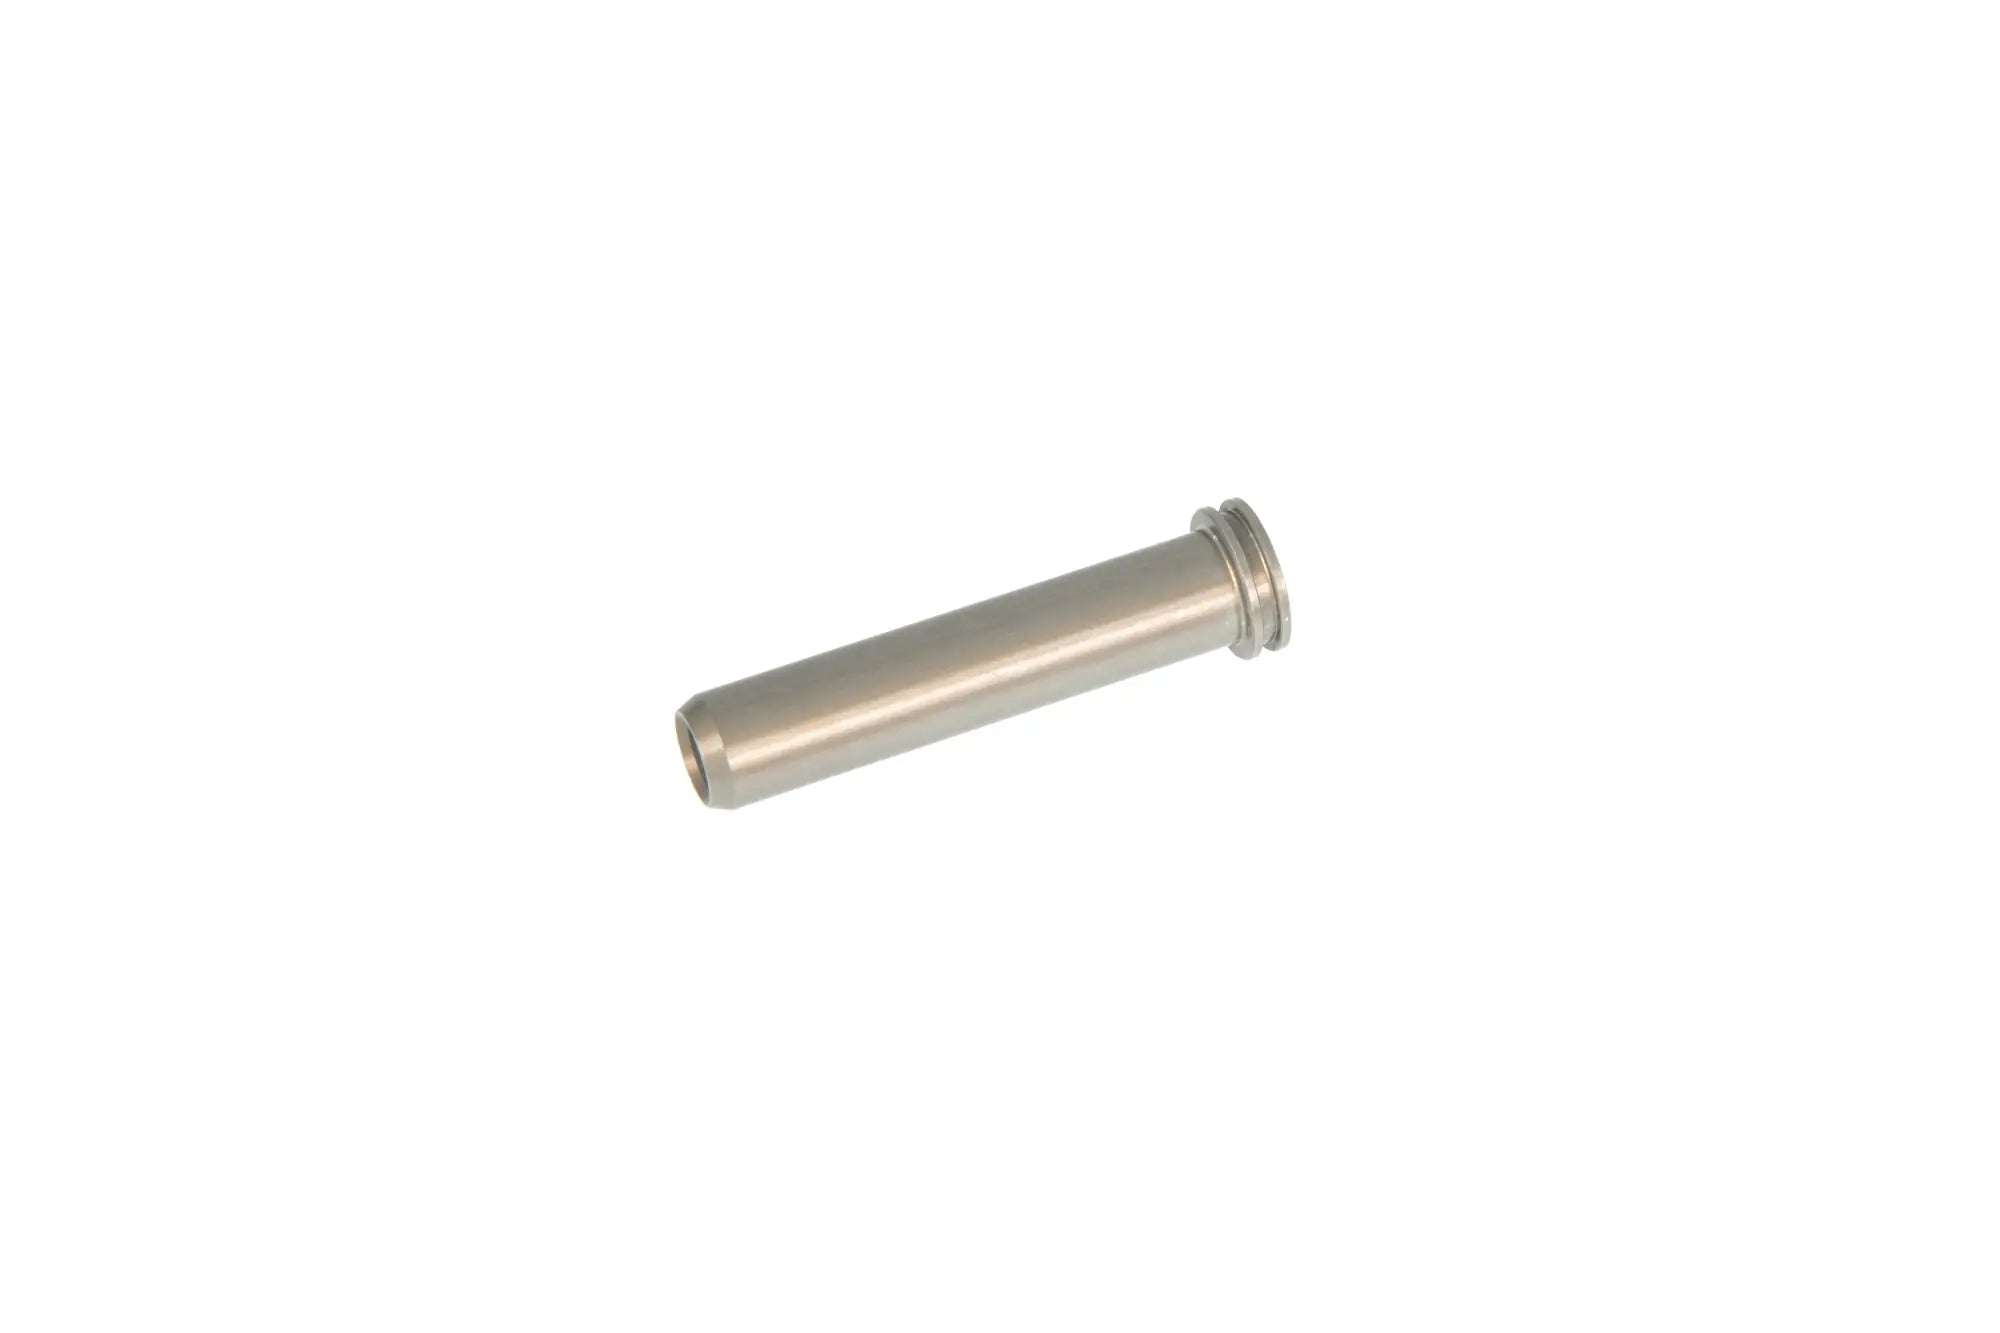 Standard nozzle for CZ Bren AEG replicas (34,1 mm.)